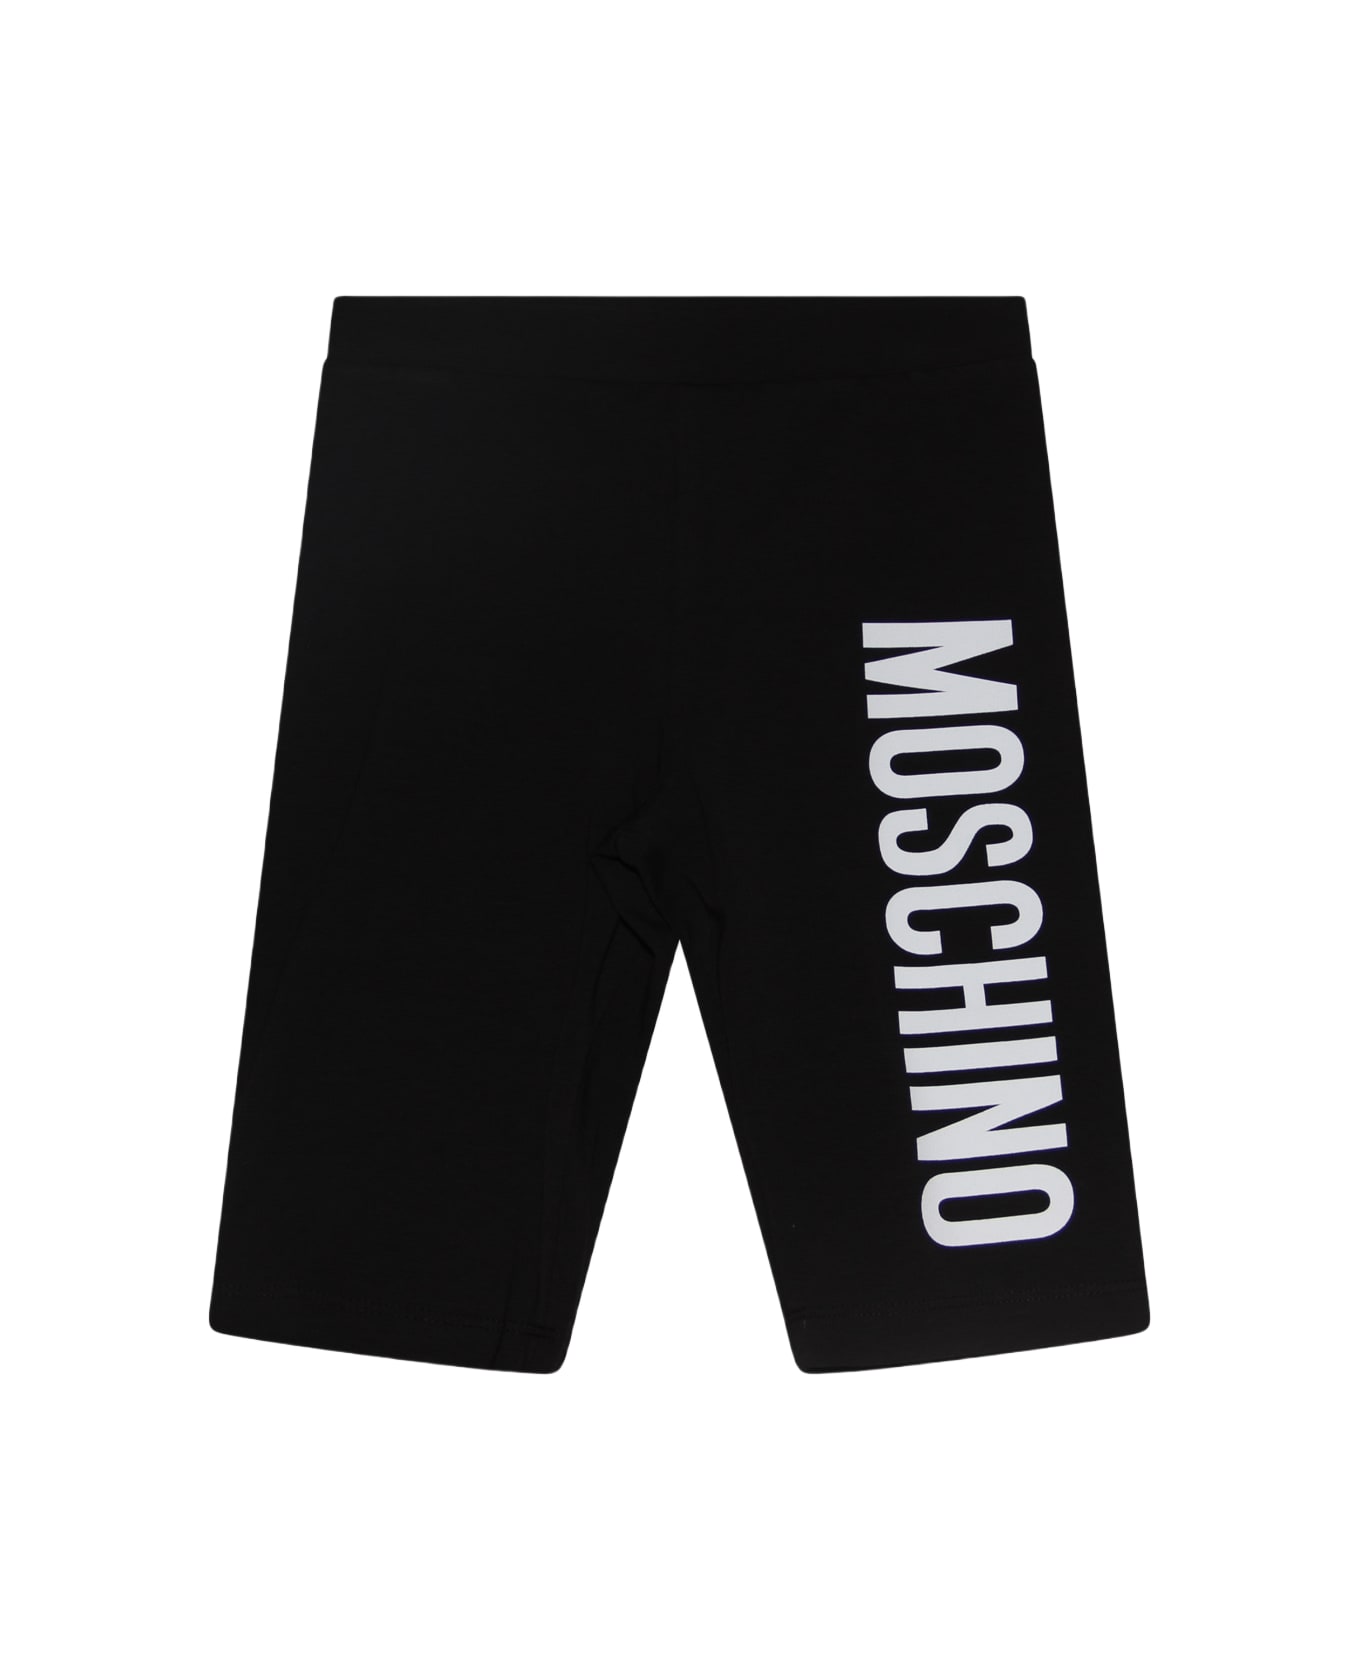 Moschino Black And White Cotton Blend Shorts - Black